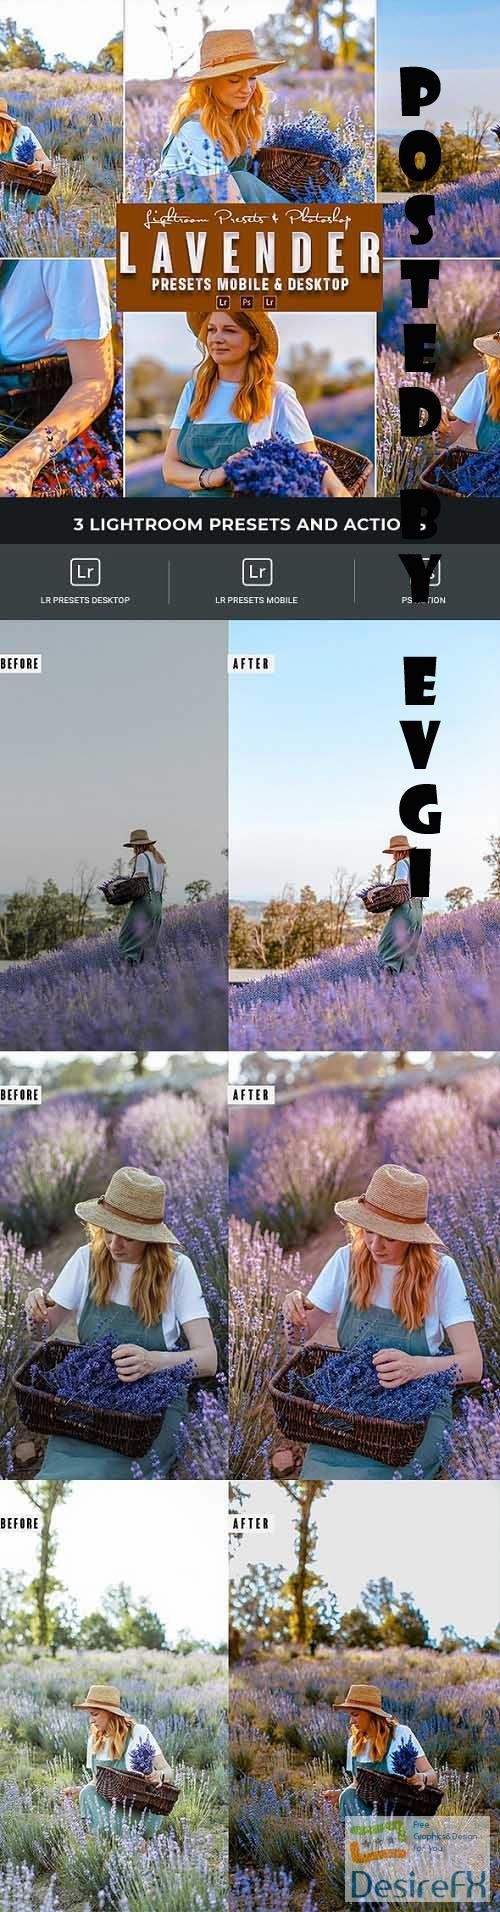 Lavender Photoshop Action &amp; Lightrom Presets - 34858971